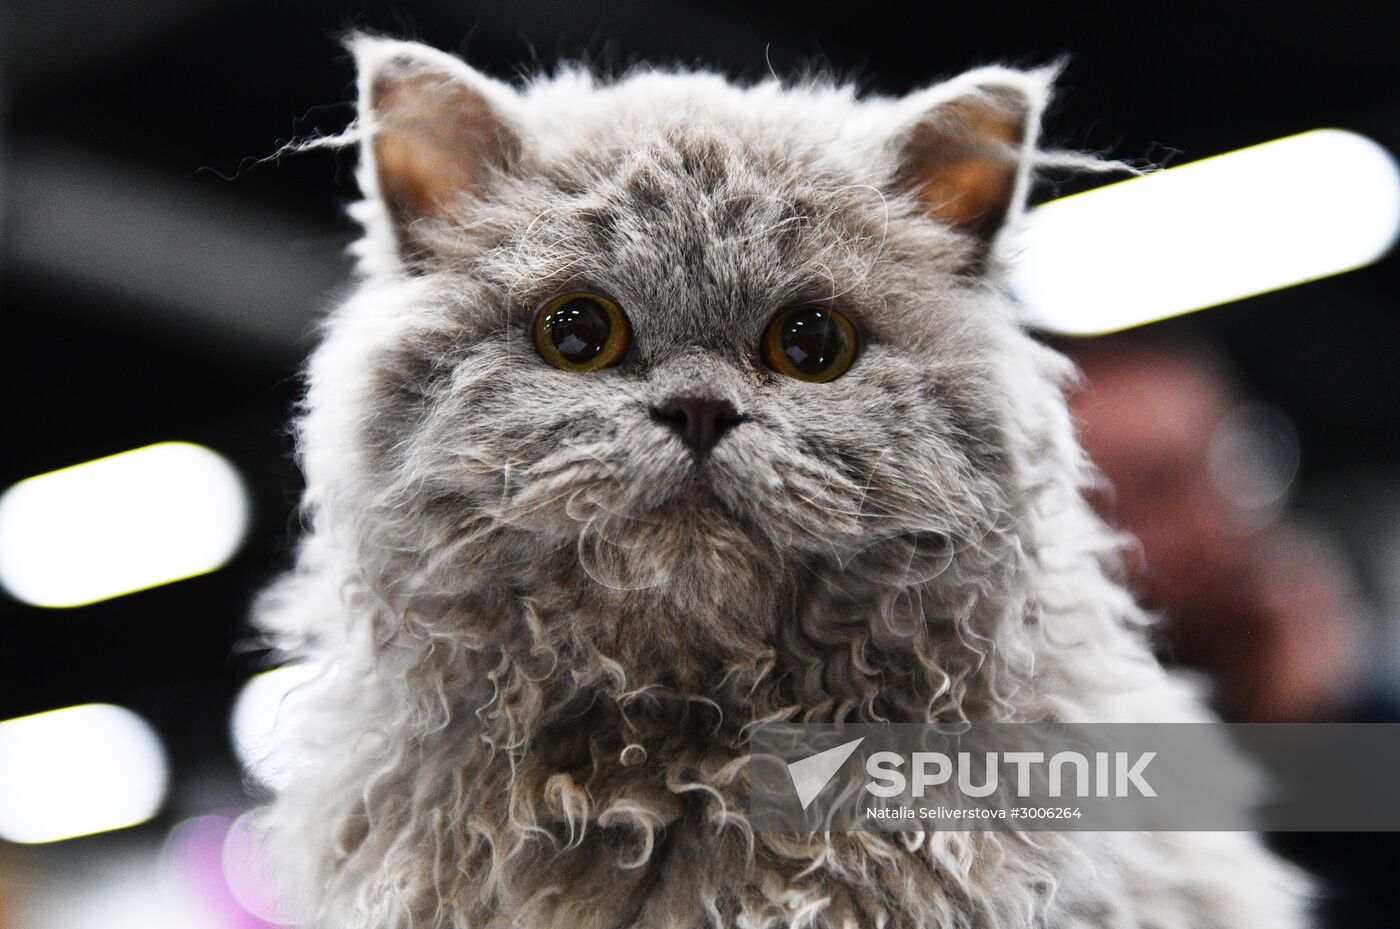 KoShariki Cat Show and kitten sale in Moscow